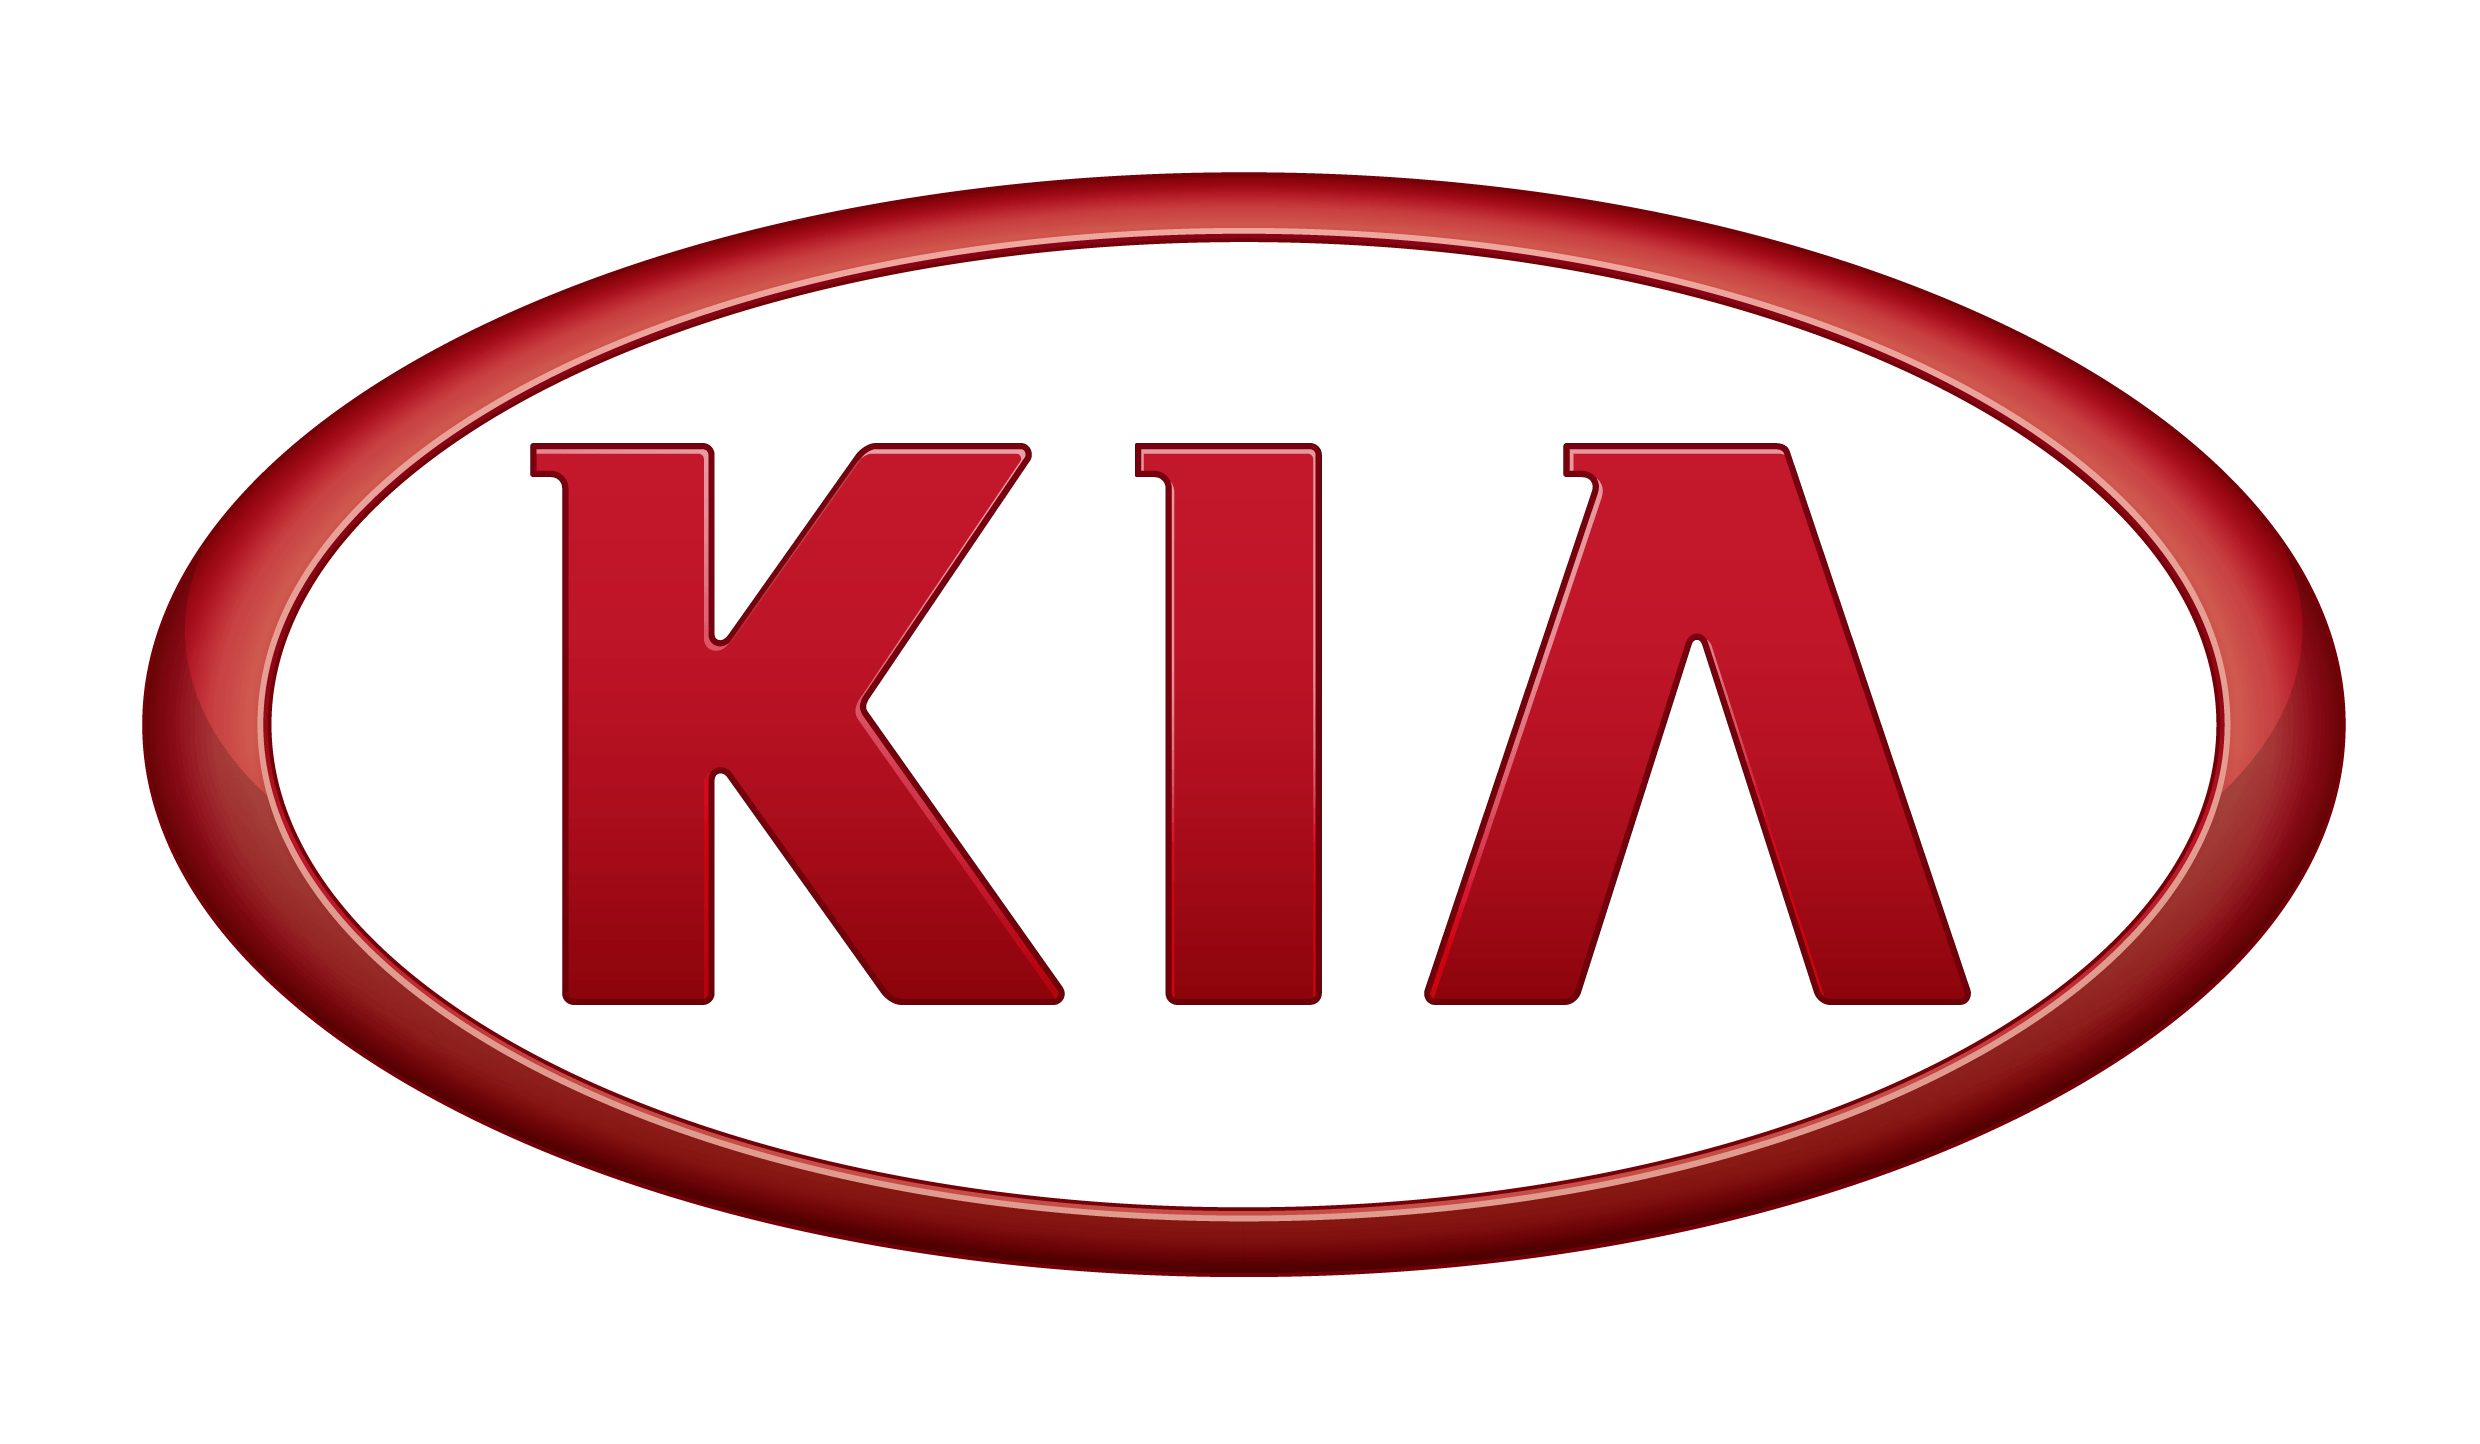 Red Oval Auto Logo - Kia Logo, Kia Car Symbol Meaning and History | Car Brand Names.com